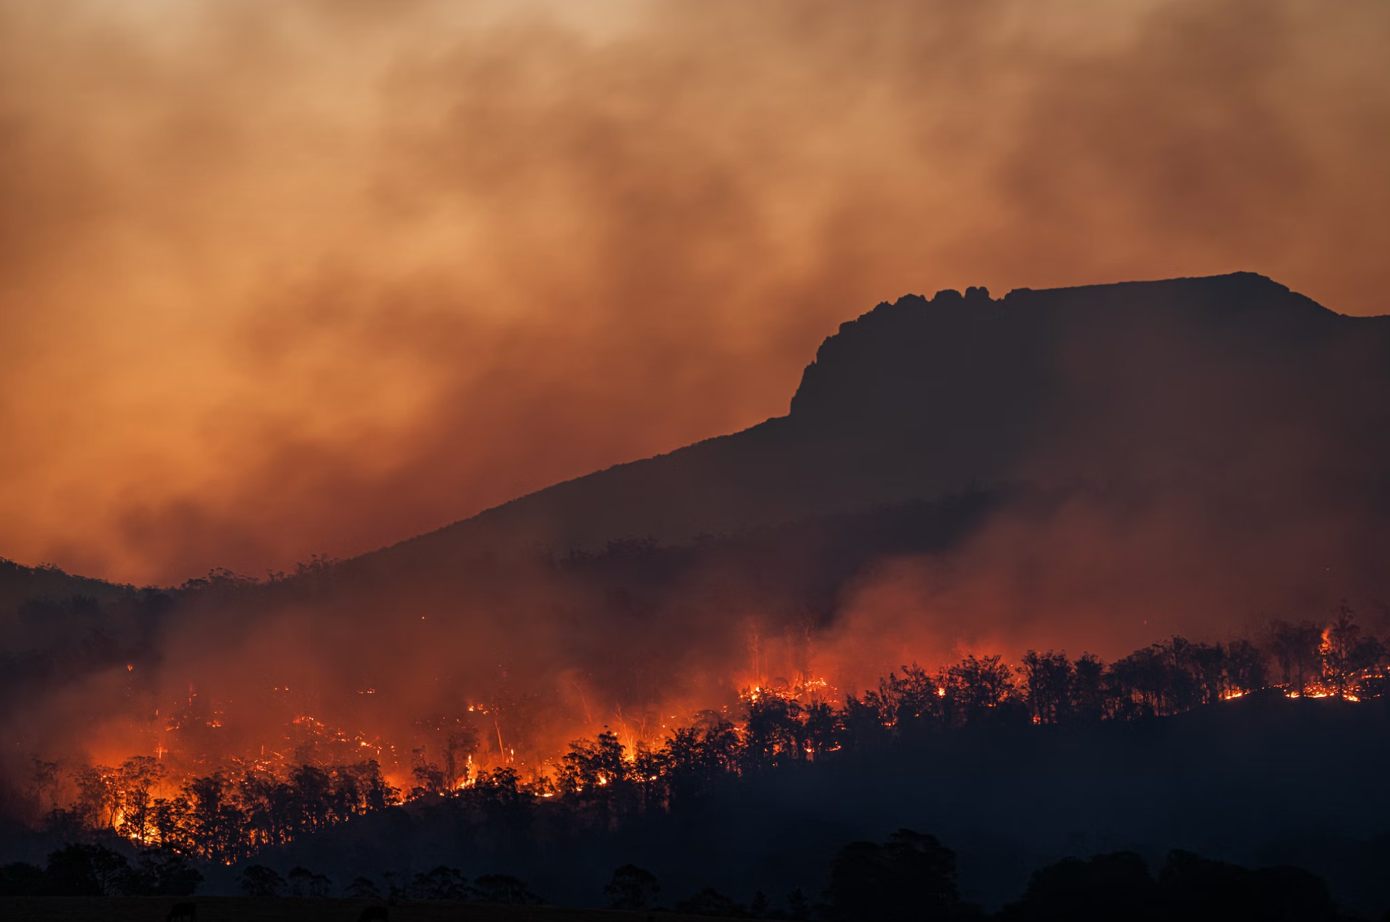 Bushfires below Stacks Bluff, Tasmania, Australia; image by Matt Palmer, via Unsplash.com.